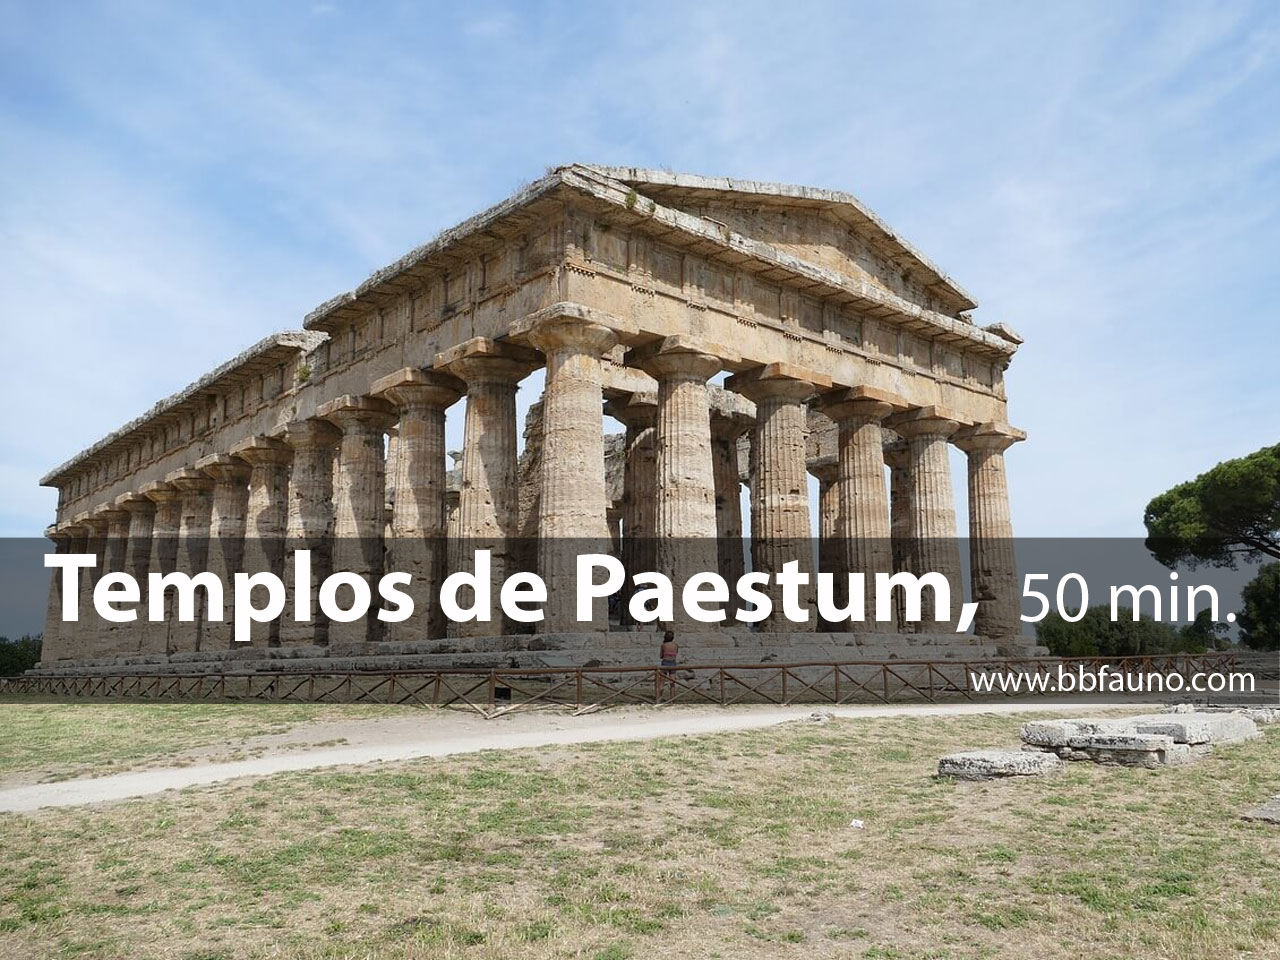 La zona arqueológica de Paestum